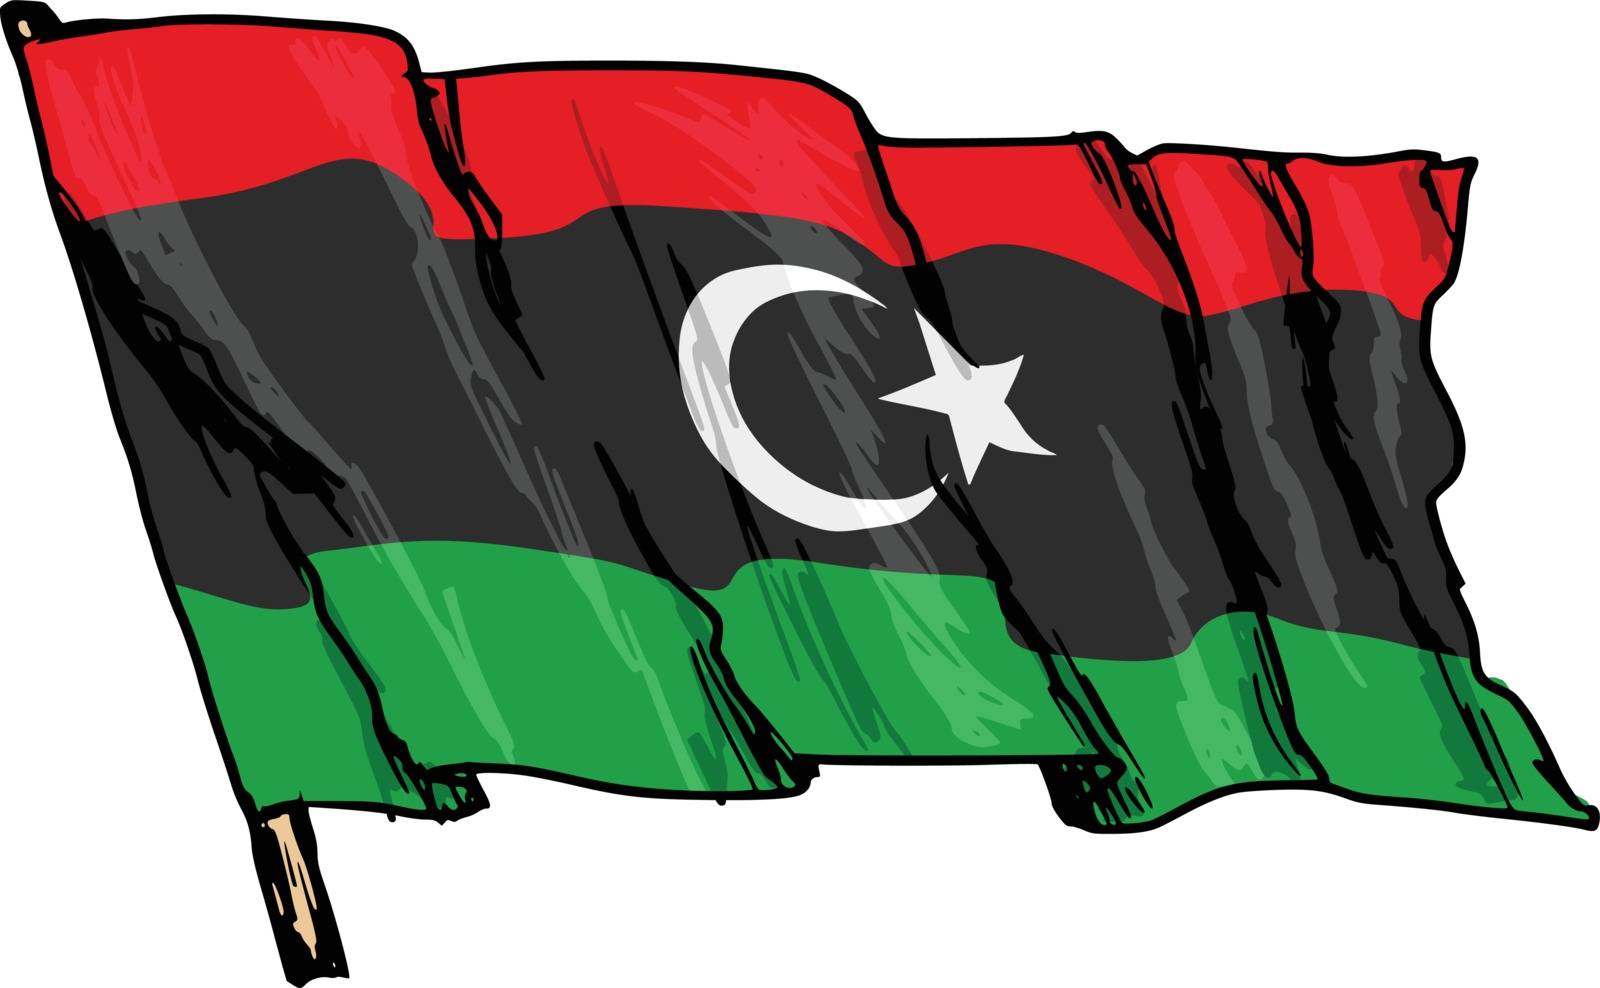 hand drawn, sketch, illustration of flag of Libya